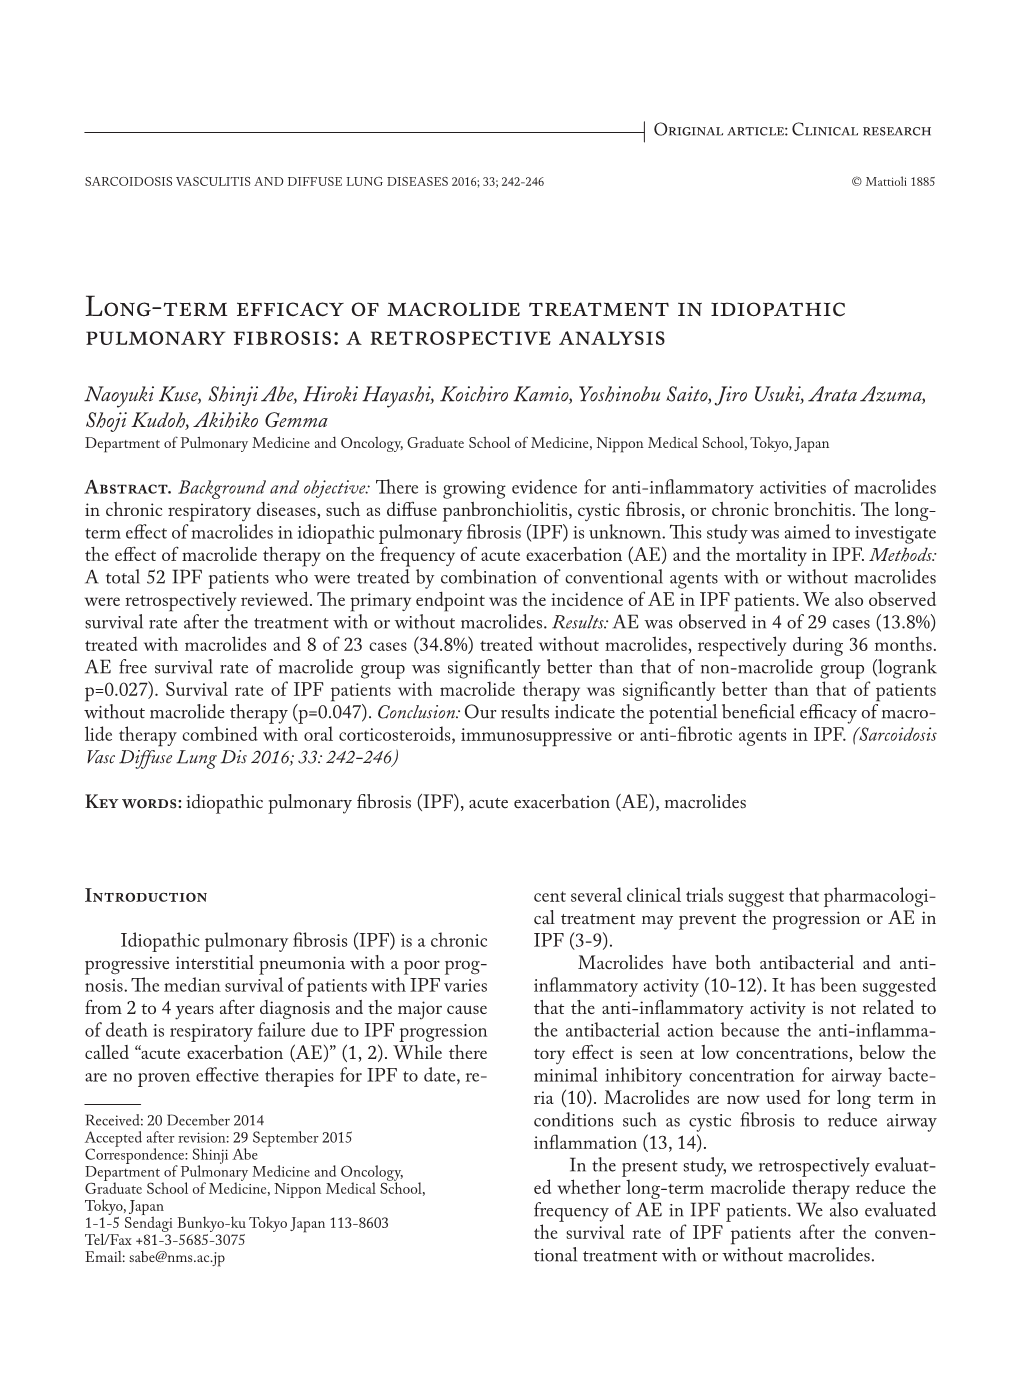 Long-Term Efficacy of Macrolide Treatment in Idiopathic Pulmonary Fibrosis: a Retrospective Analysis